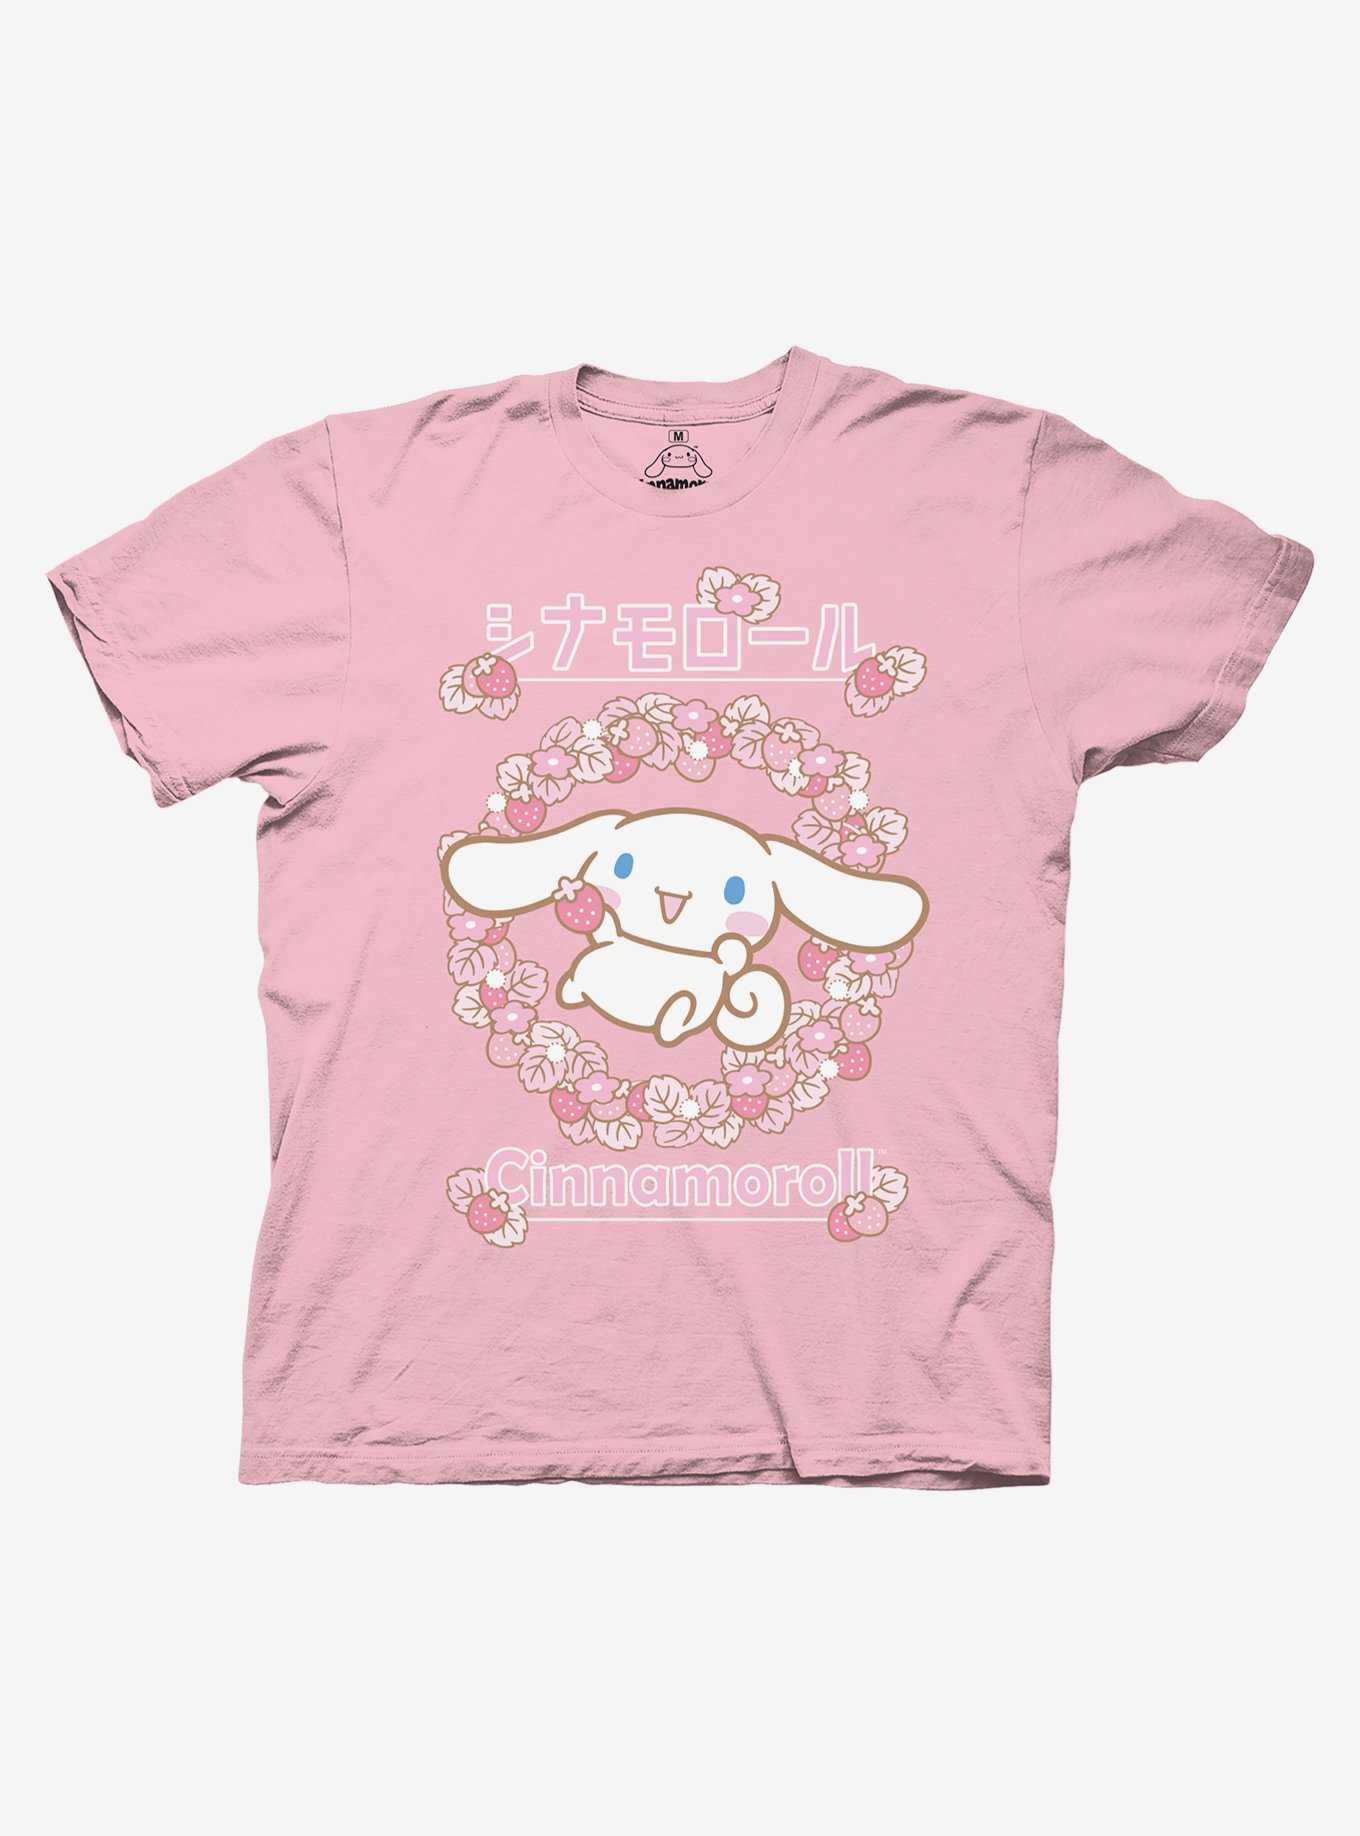 Cinnamoroll Strawberries Boyfriend Fit Girls T-Shirt, , hi-res